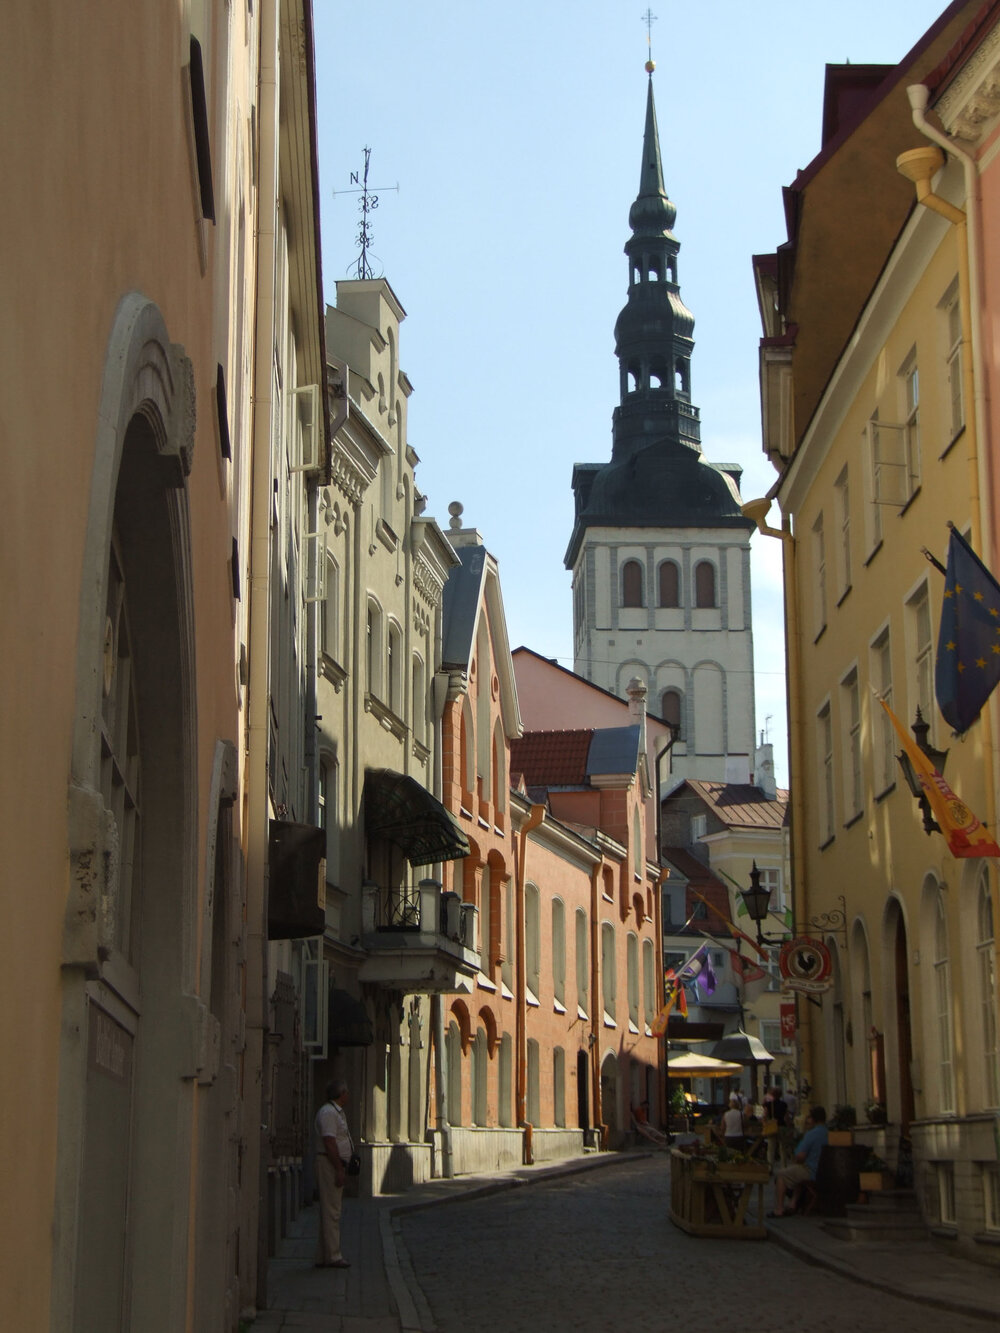 Rataskaevu Street, Tallinn, Estonia.